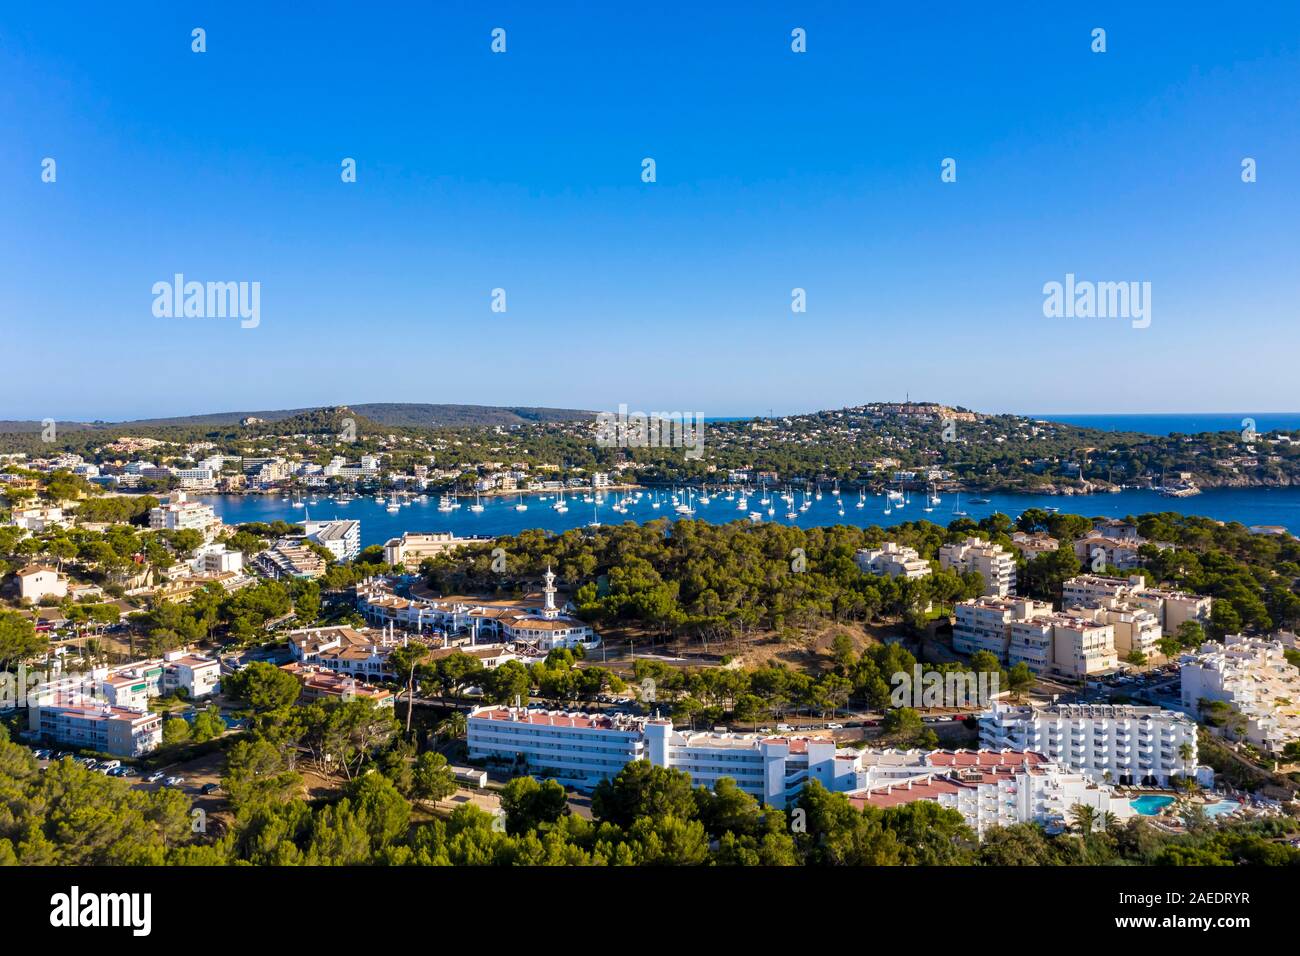 Aerial photo, view of Costa de la Calma and Santa Ponca with hotels and beaches, Costa de la Calma, Caliva region, Majorca, Balearic Islands, Spain Stock Photo